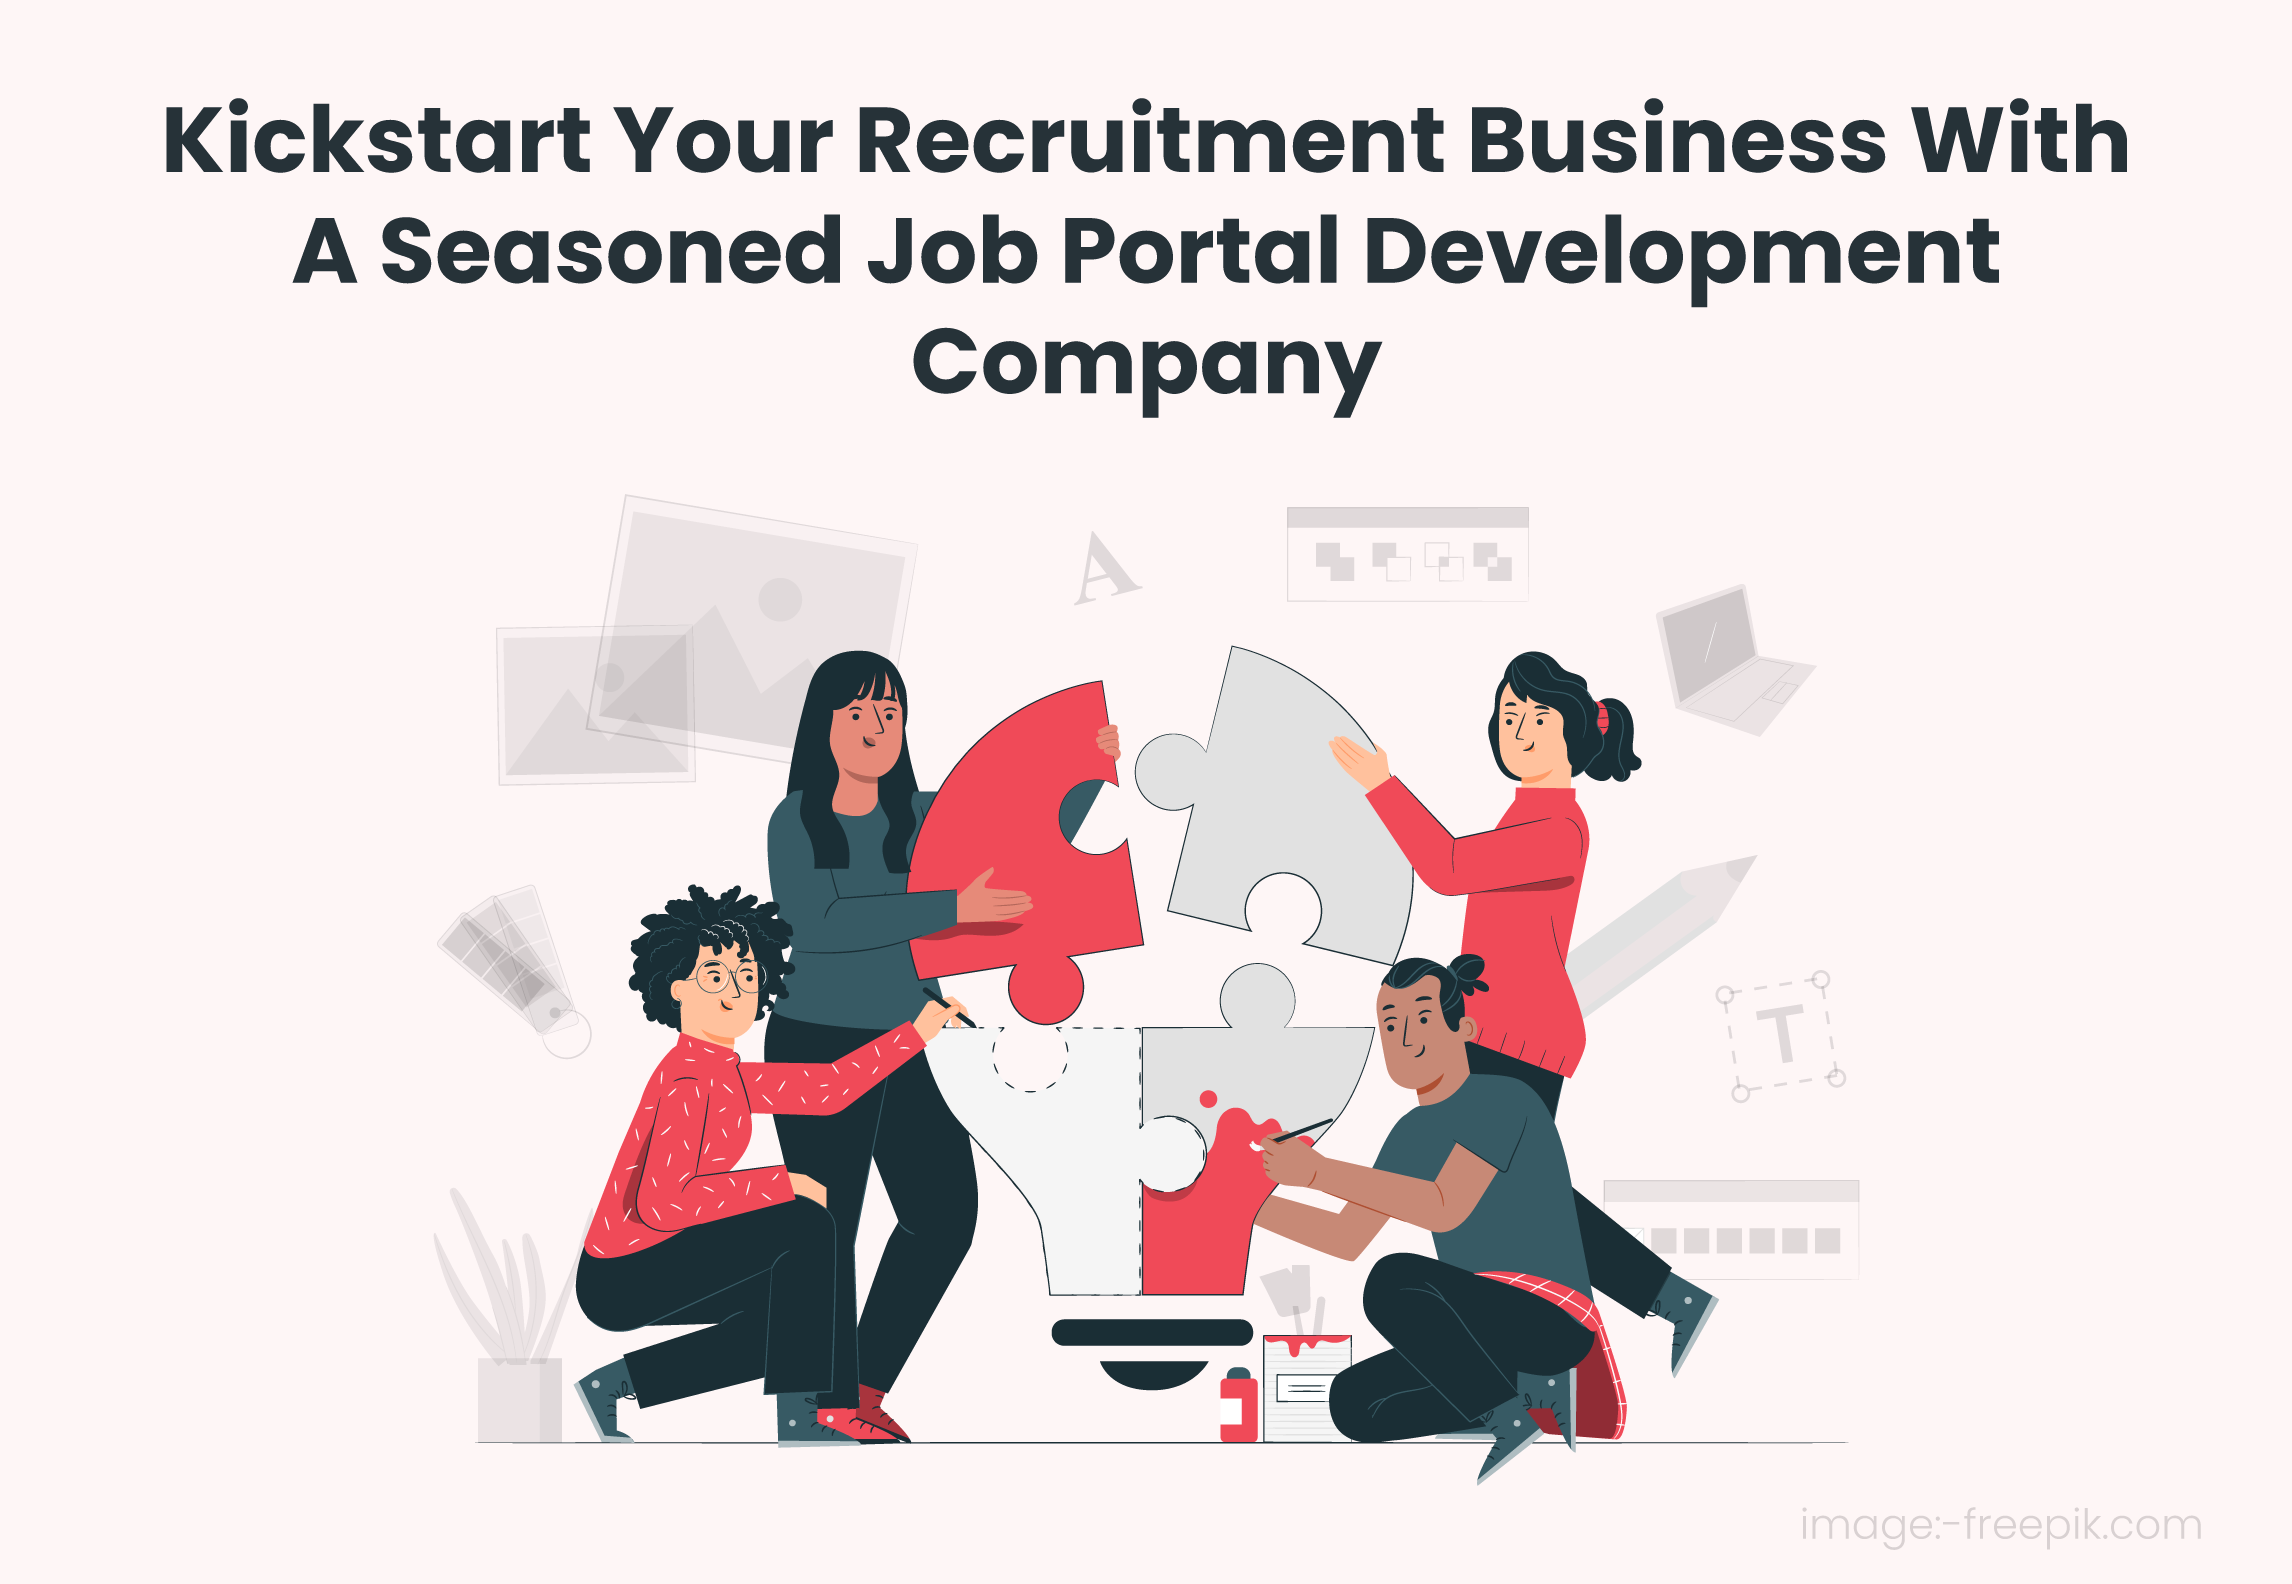 Kickstart Your Recruitment Business With A Seasoned Job Portal Development Company - Knovator